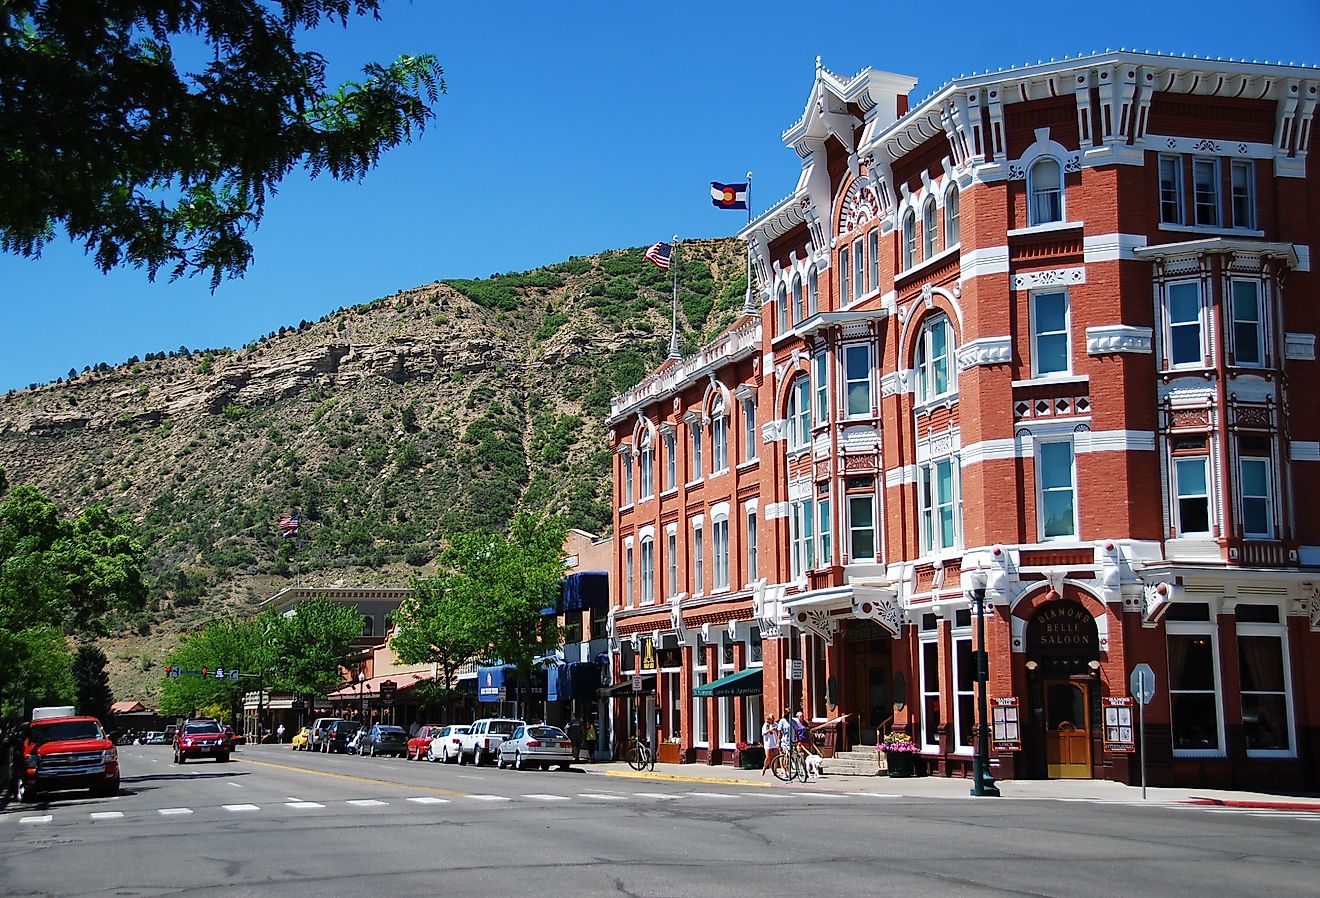 Main Street in Durango, Colorado. Image credit WorldPictures via Shutterstock